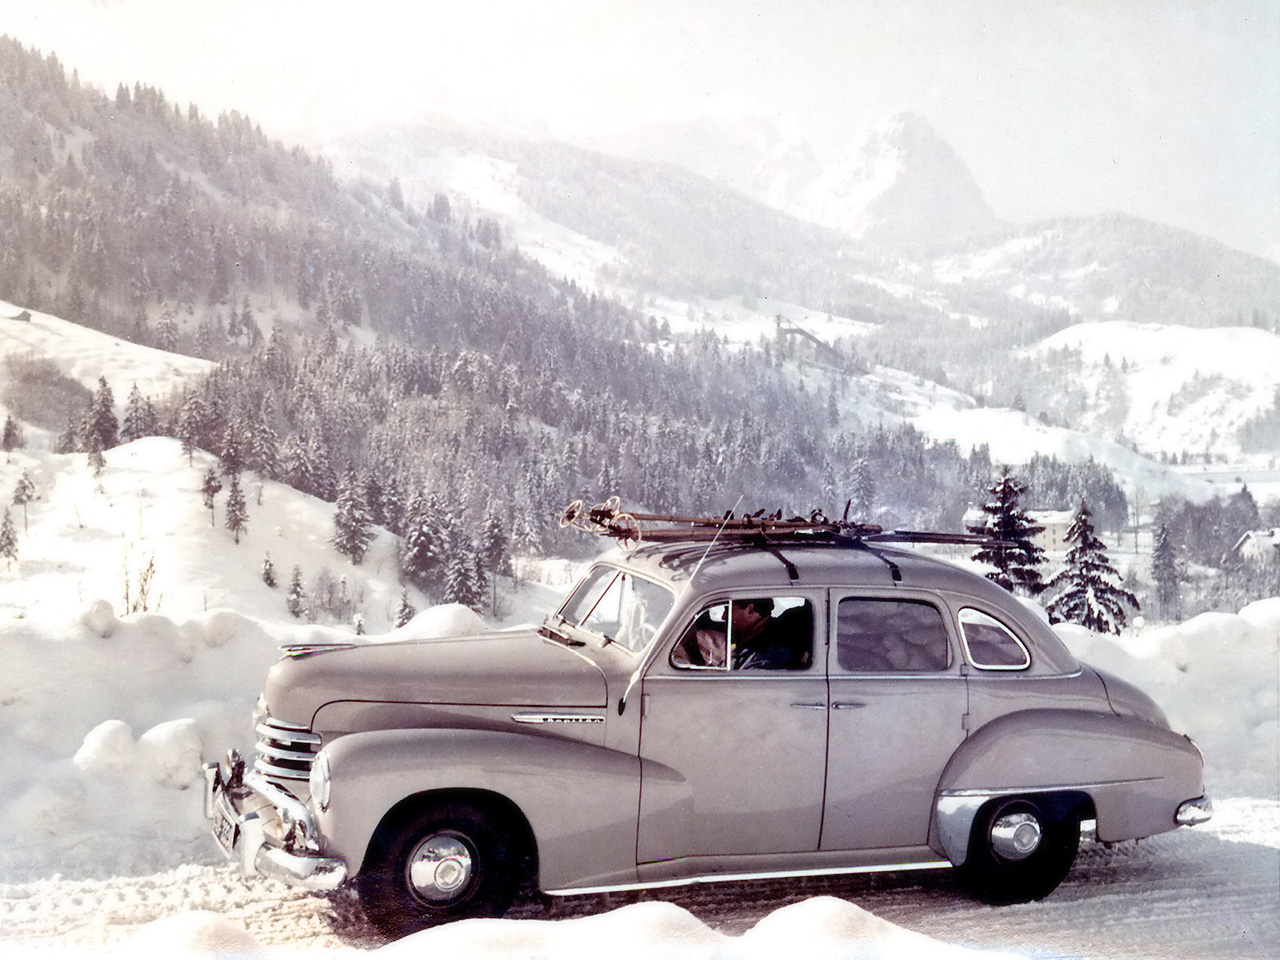 Opel Period Photos of Winter